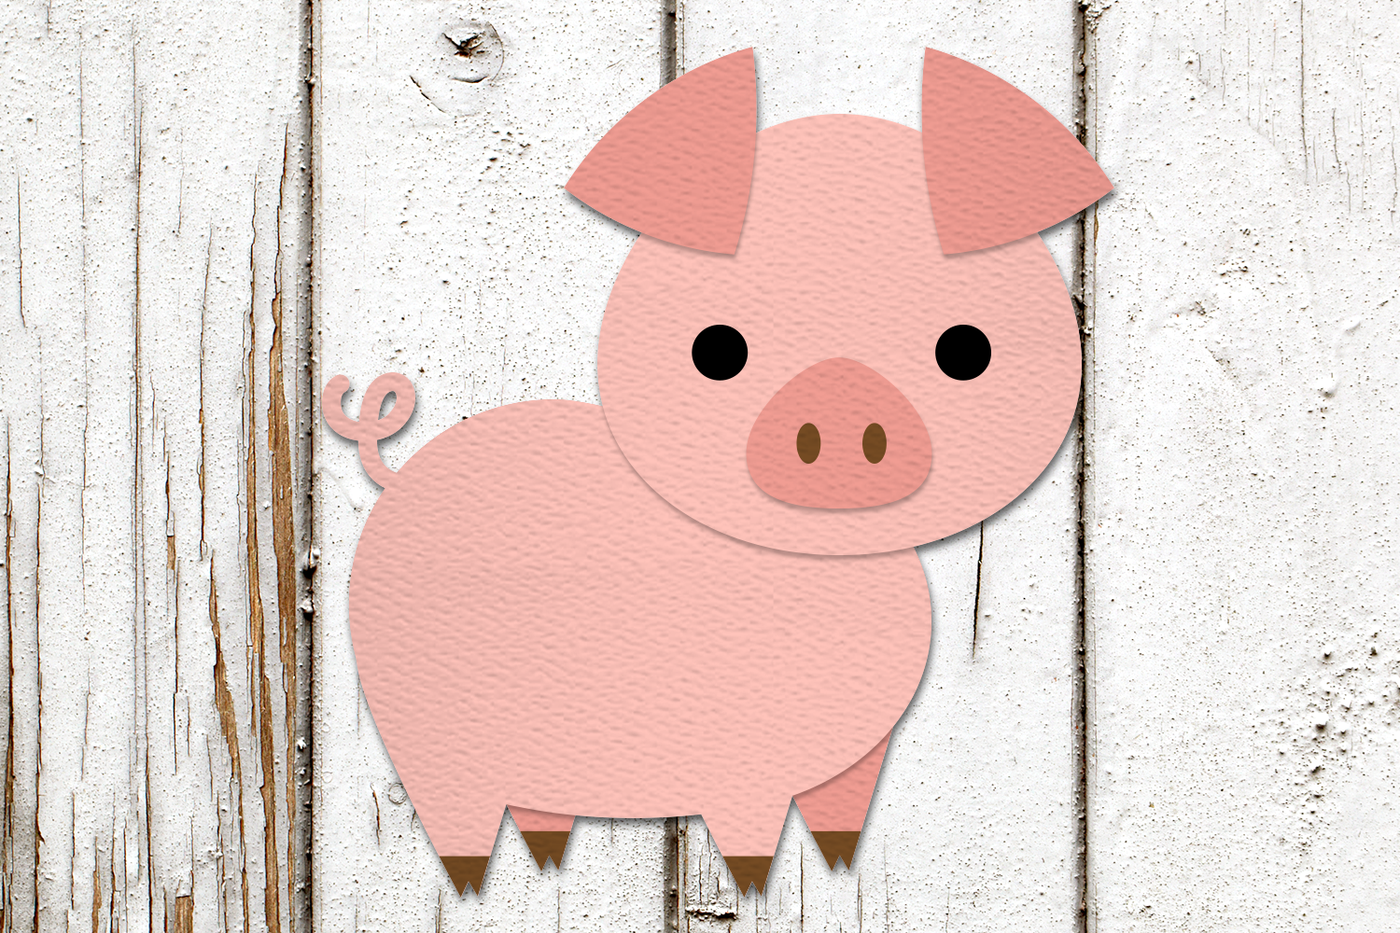 Layered paper pig design